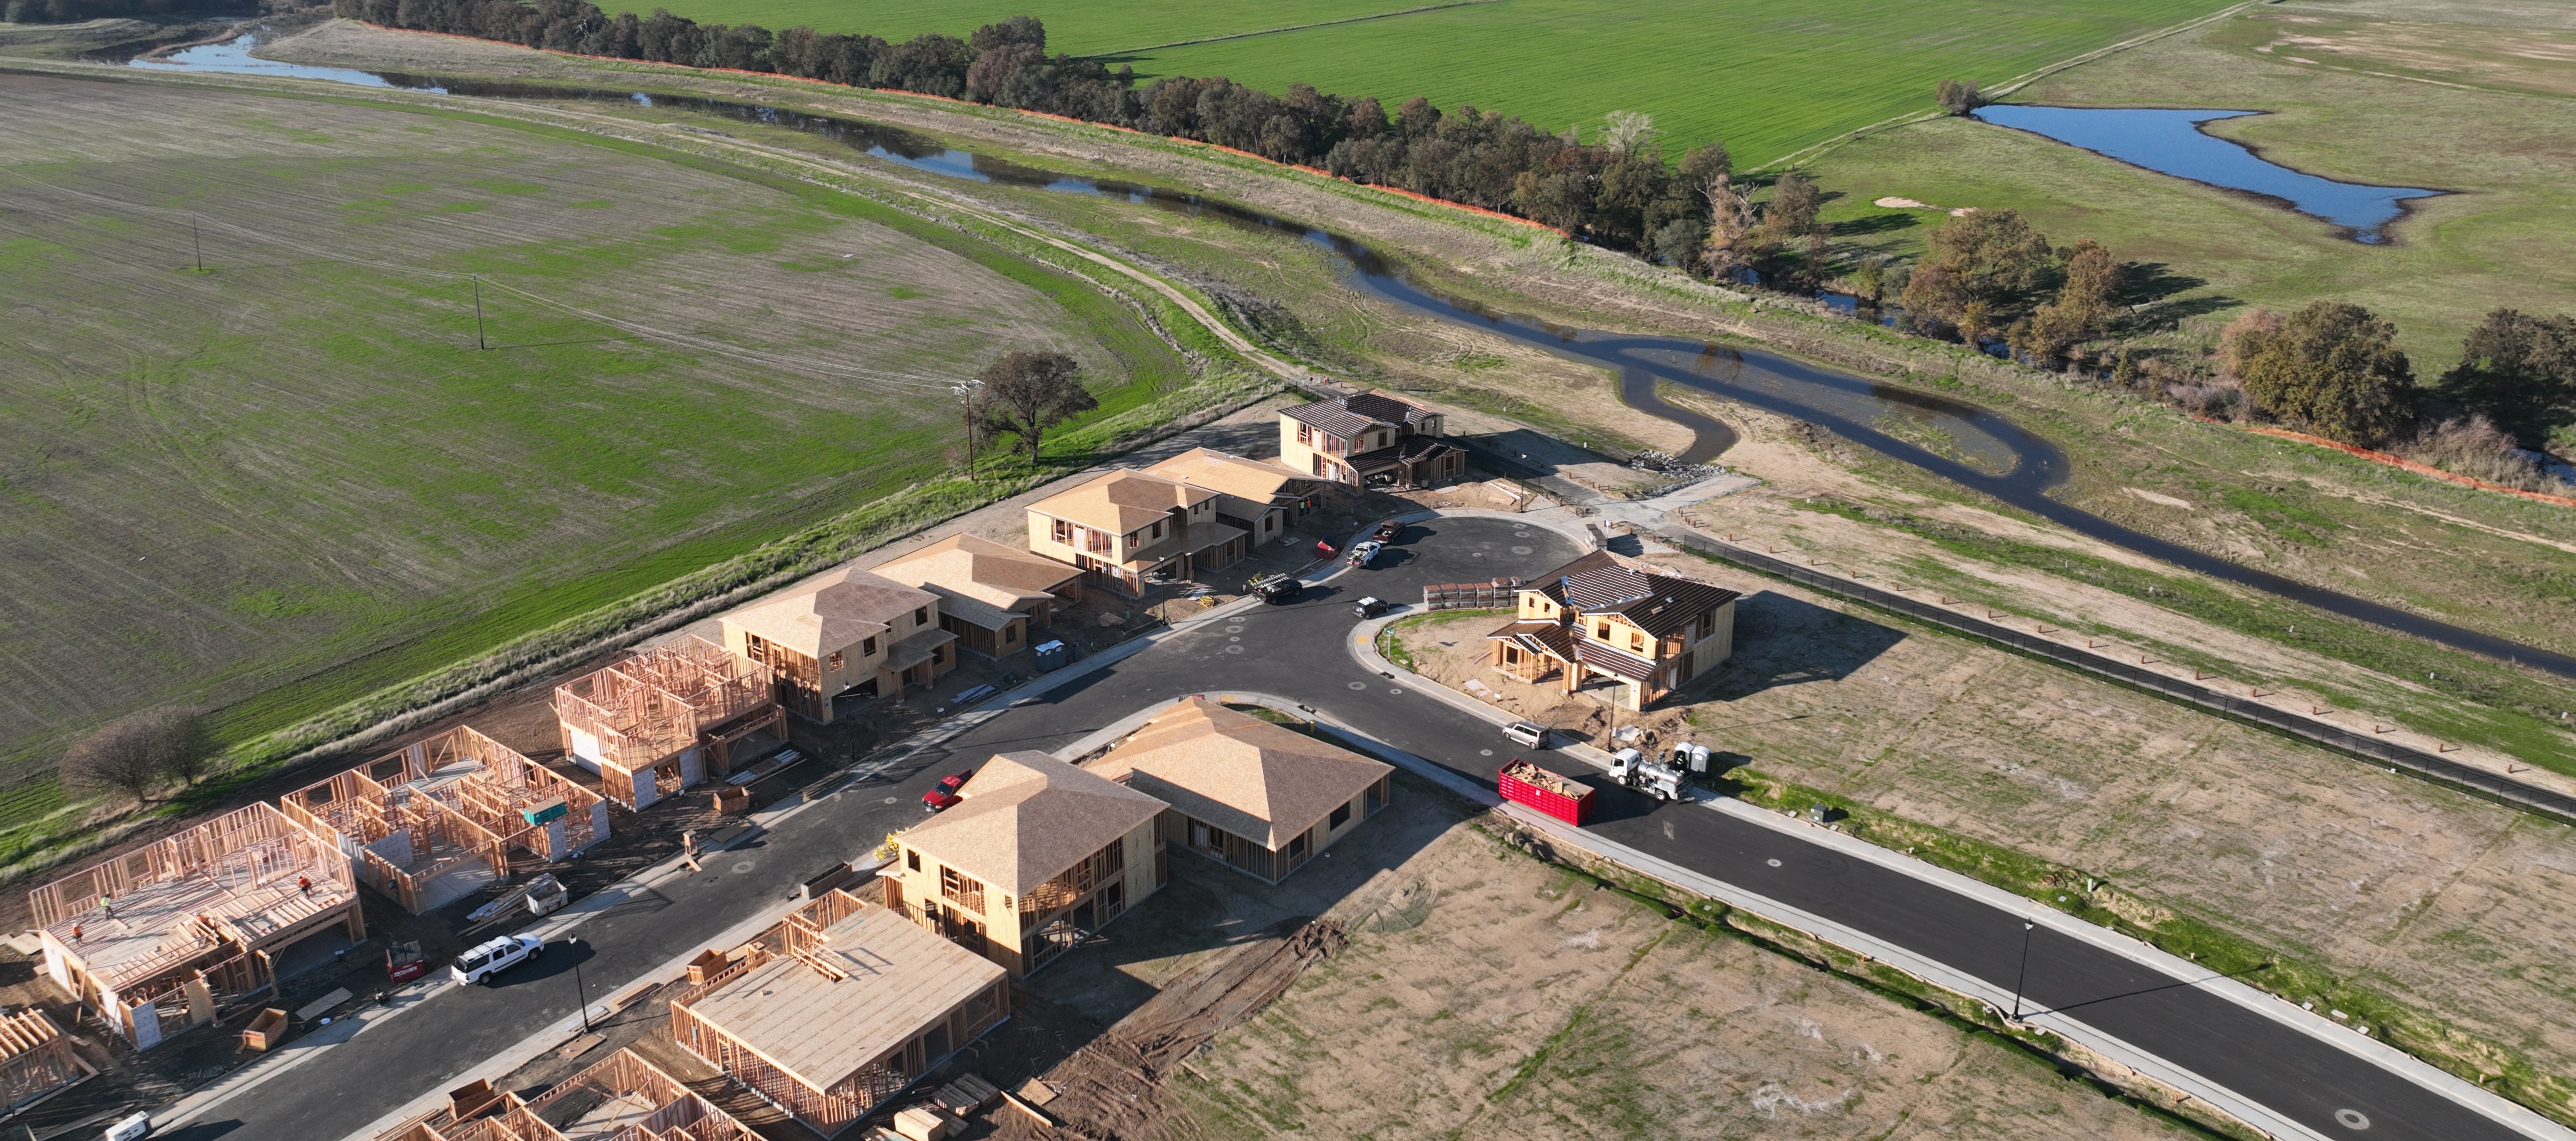 Housing Development Aerial Image